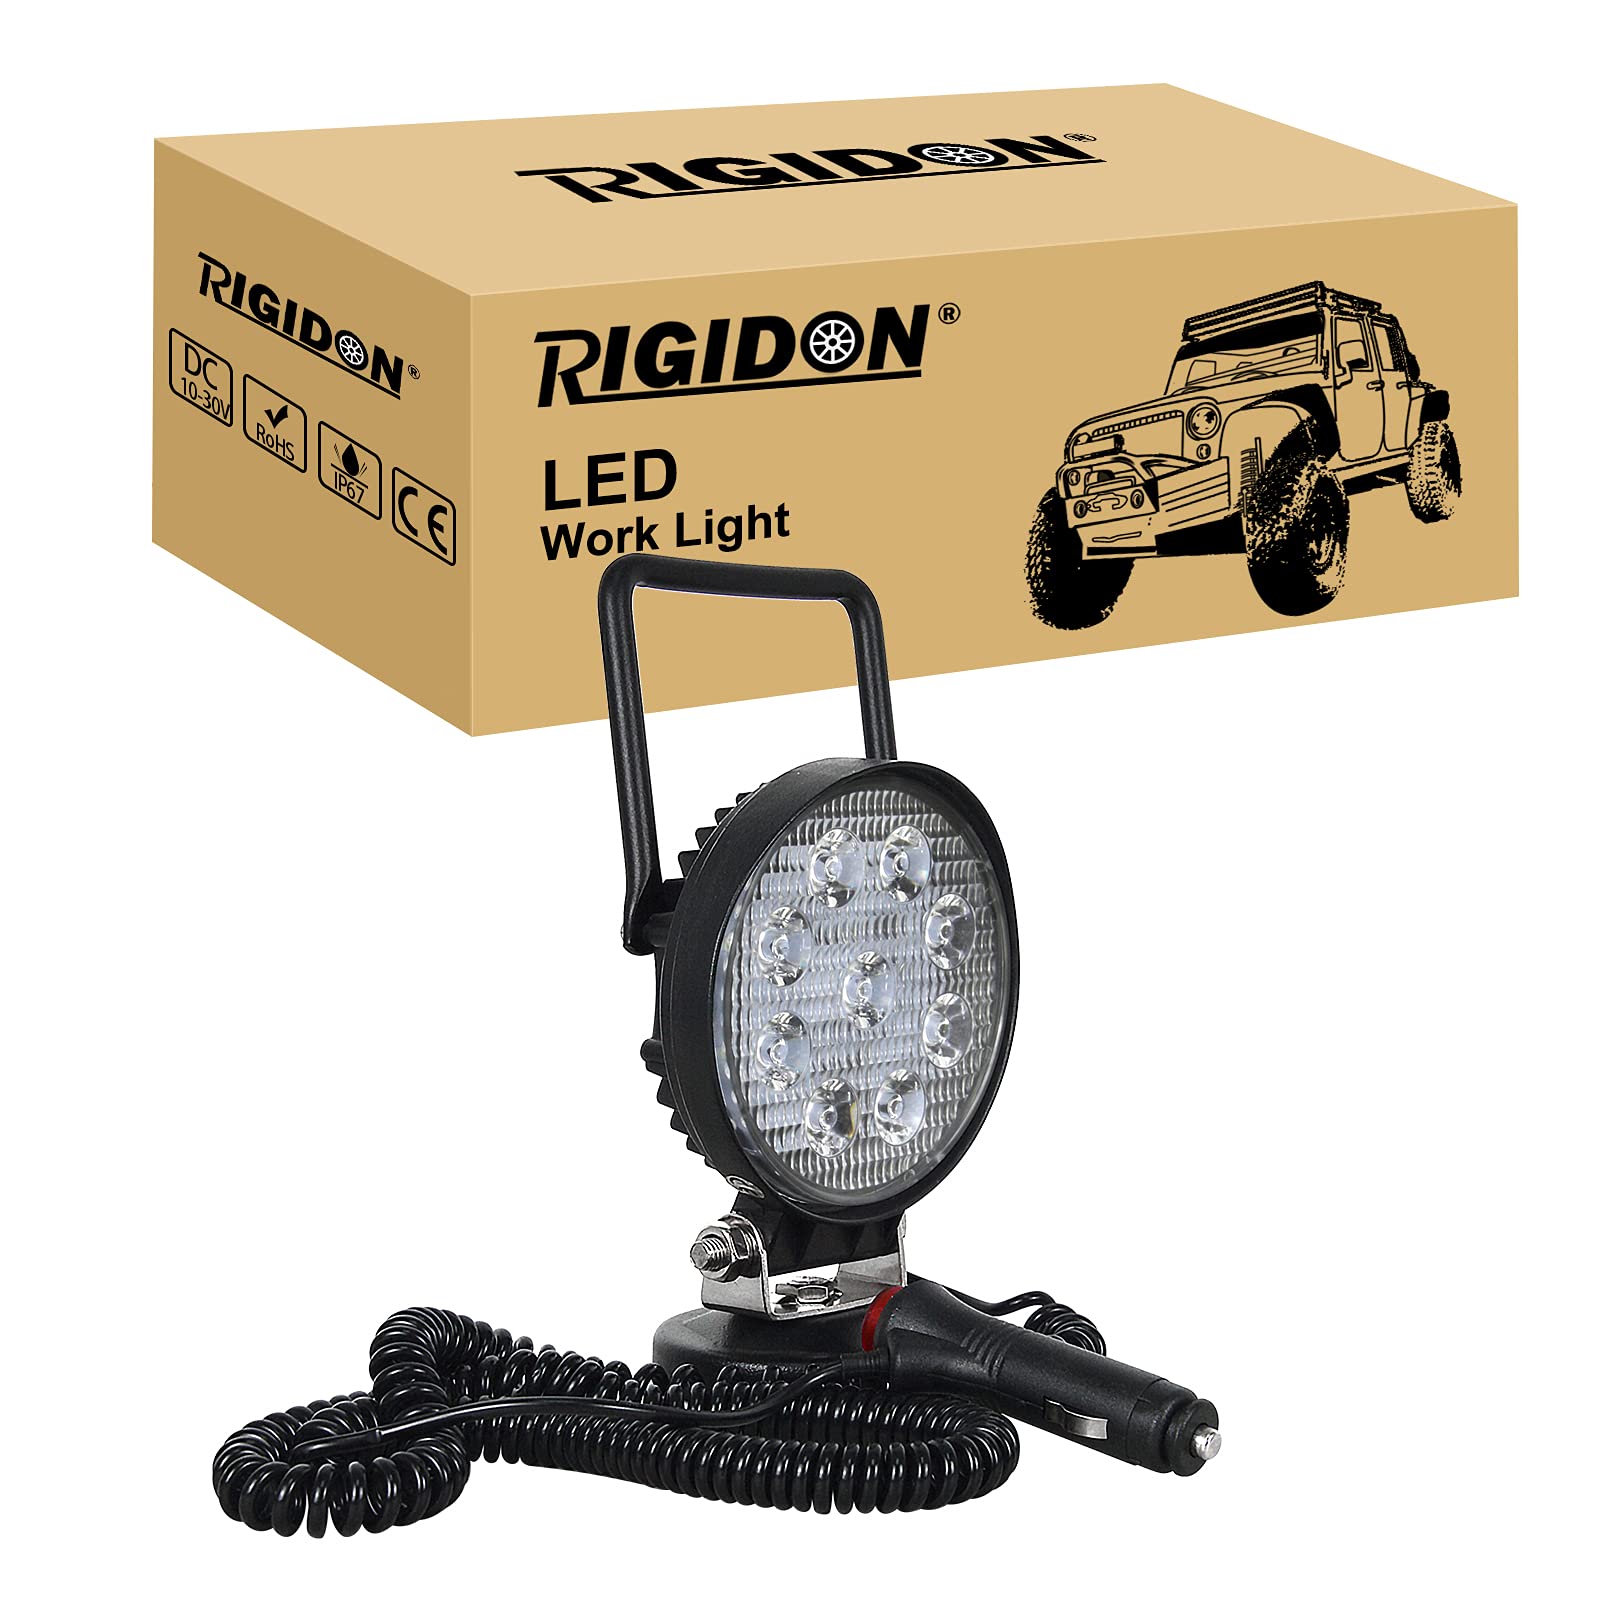 RIGIDON 1 Pcs Led arbeitsscheinwerfer mit magnetfuß, 12V 24V 4 Zoll 10cm 27W led Spot Strahler, offroad beleuchtung für Auto SUV ATV, Traktor, LKW, 4x4, Boot,6000K led suchscheinwerfer, arbeitslicht von RIGIDON